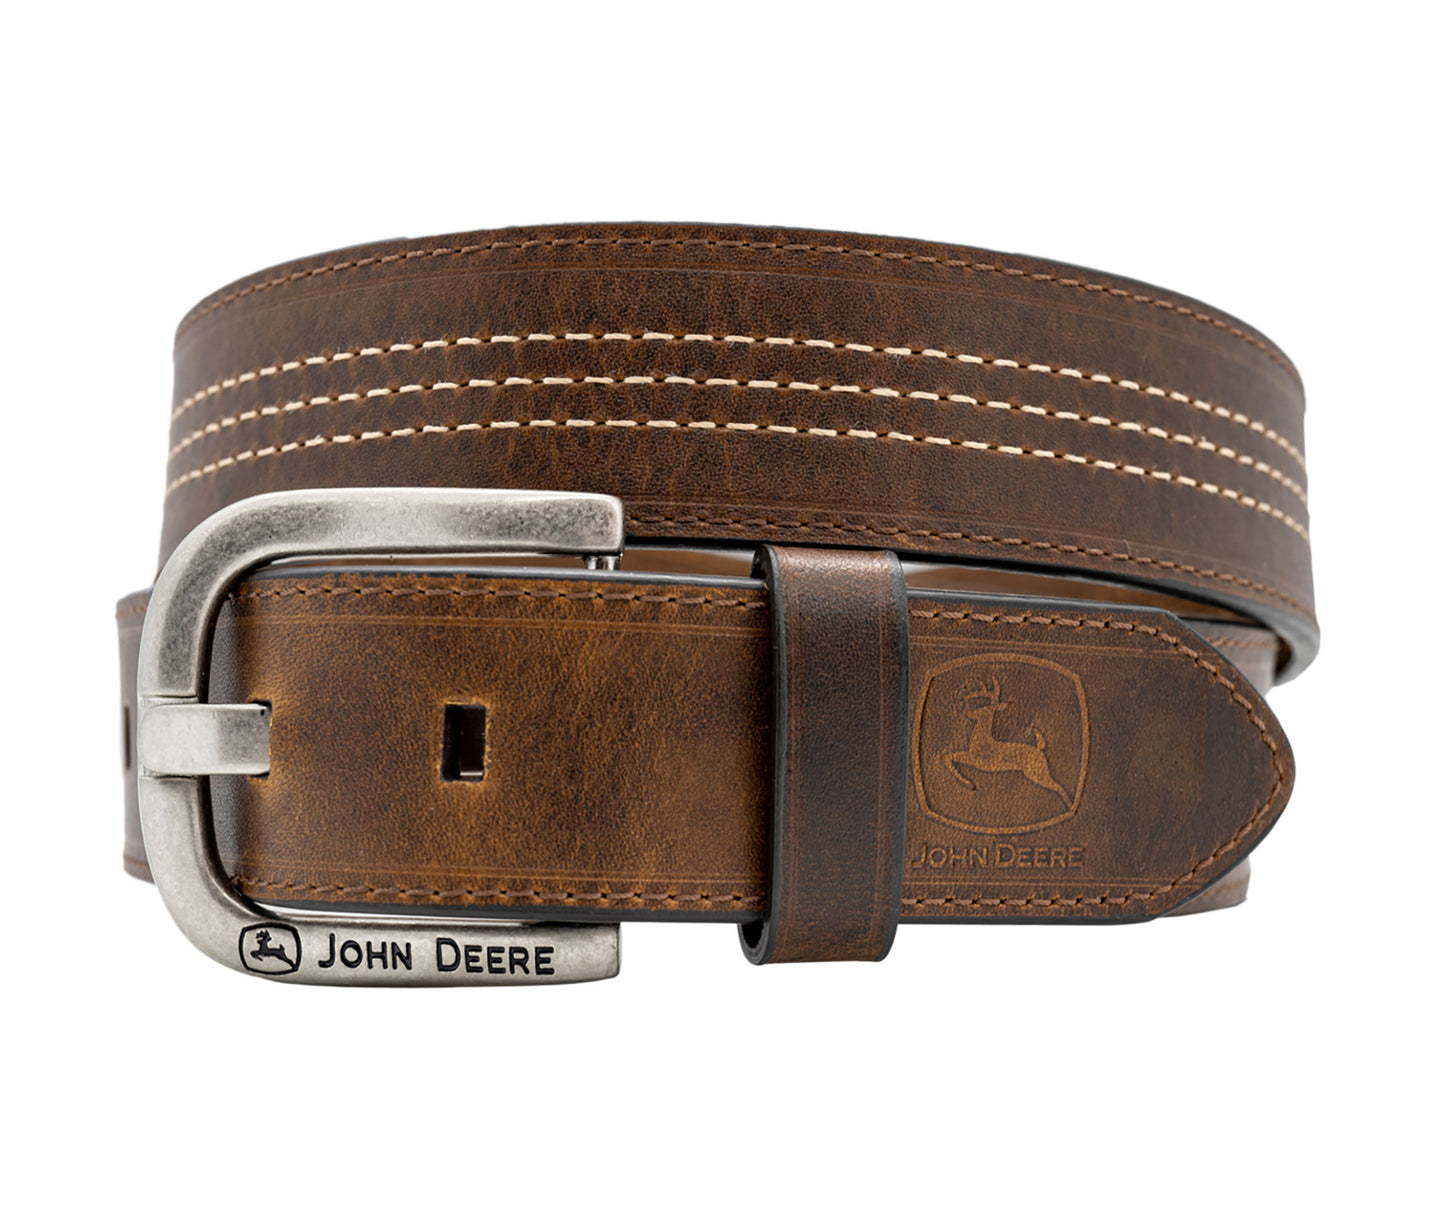 John Deere Oil Tanned Genuine Leather Belt - Brown - 4503500-200